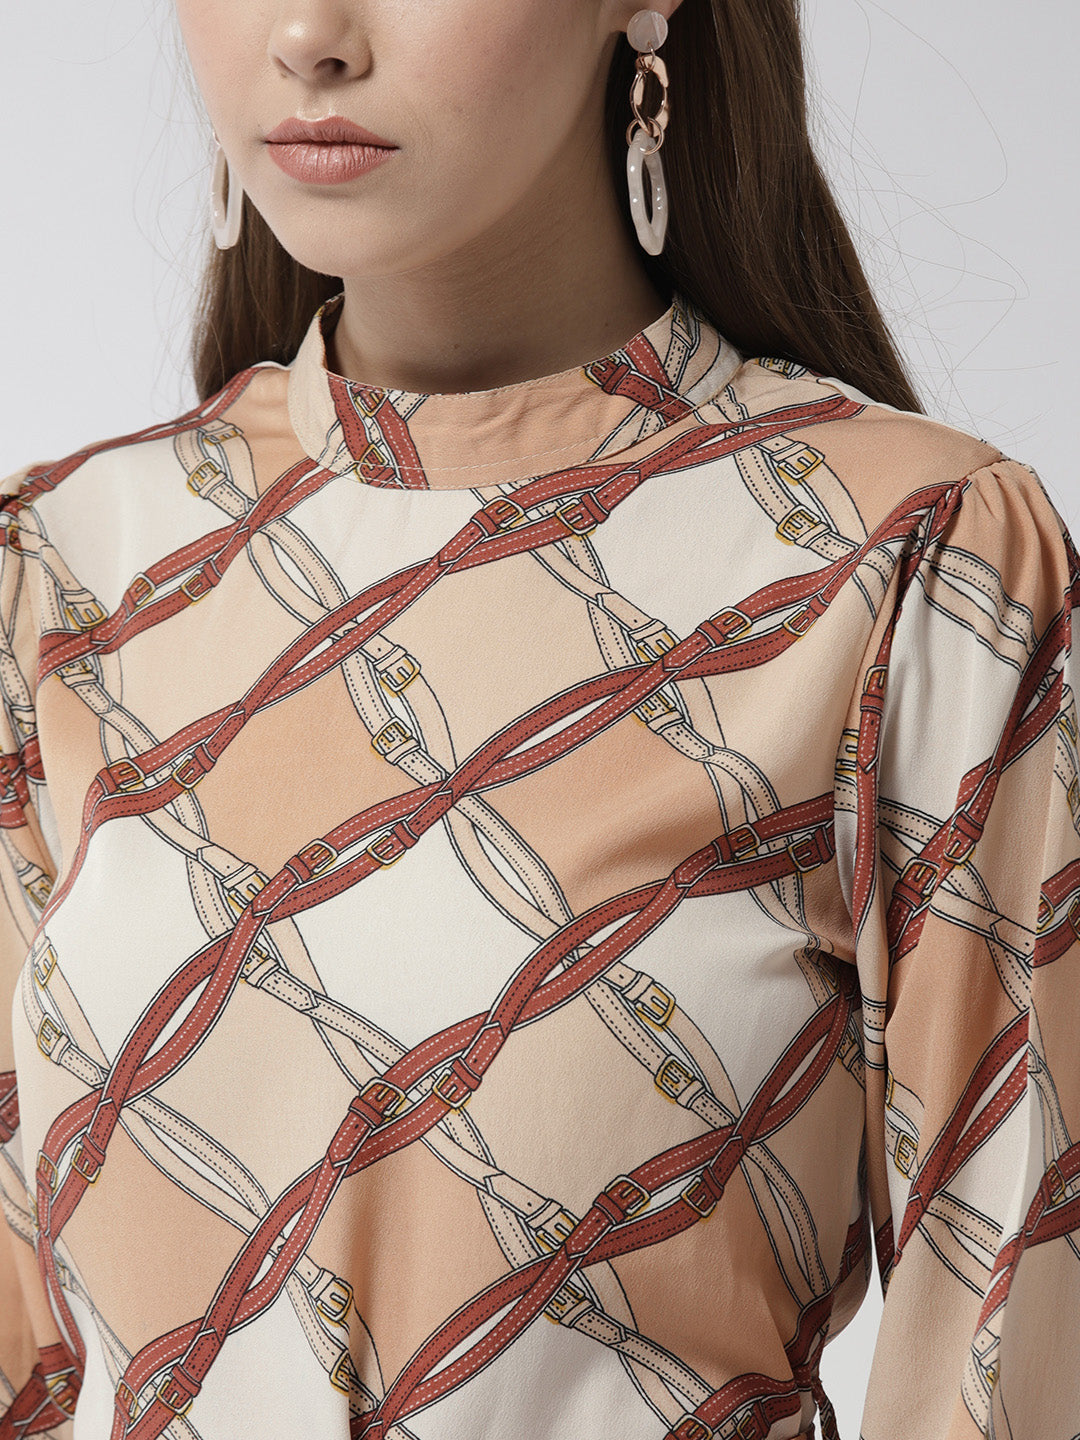 Women's Brown Polyester Belt Print Manderin Collar Dress with belt - StyleStone